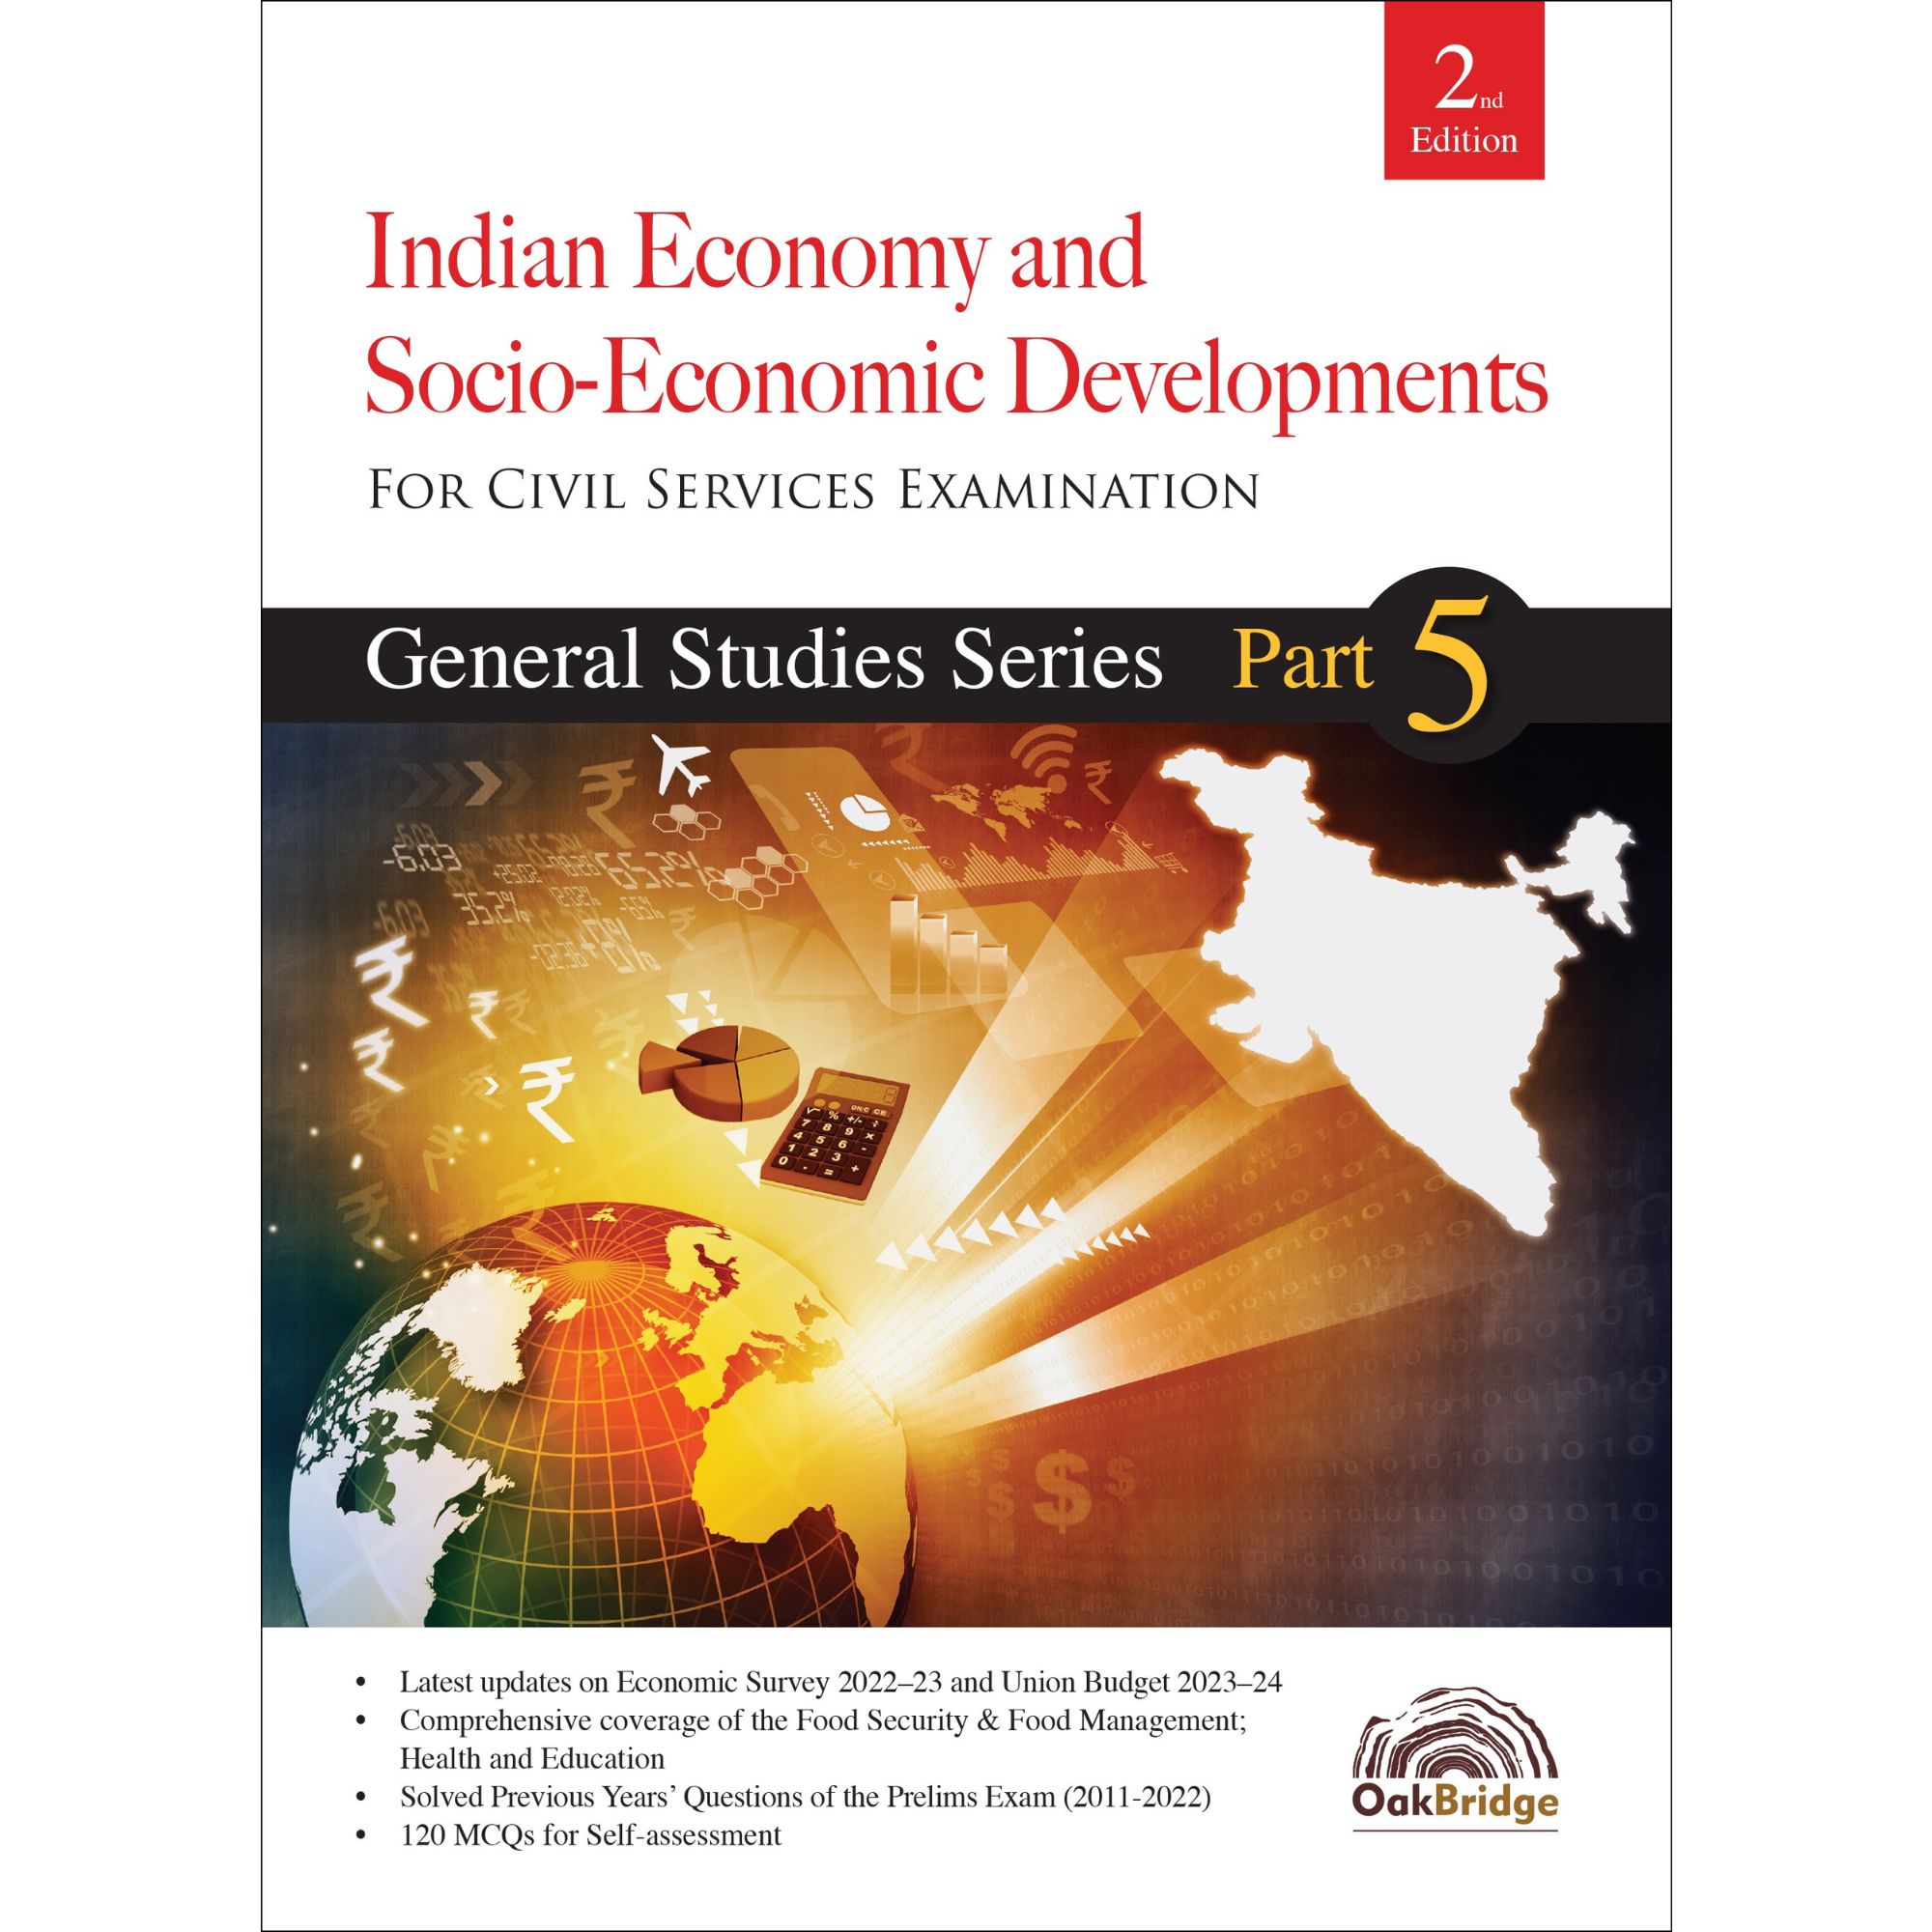 General Studies Series Part 5 -Indian Economy and Socio-Economic Developments front cover